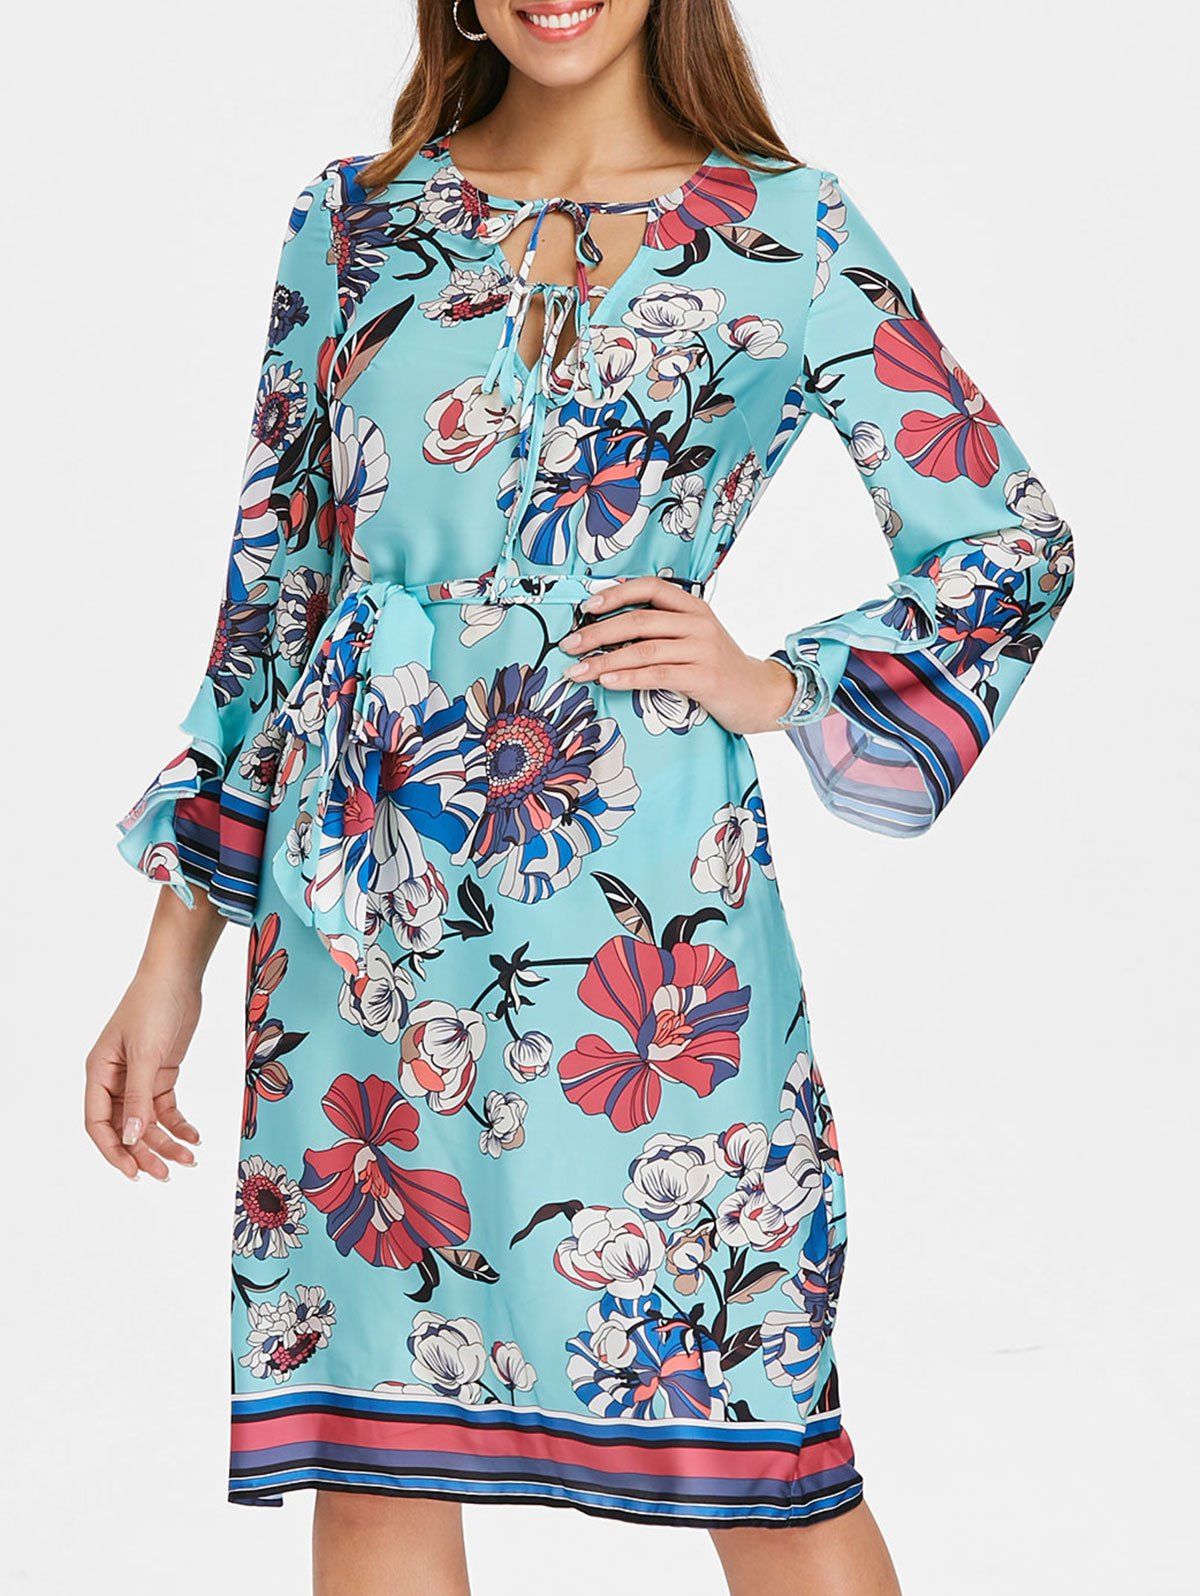 Self Tie Floral Print Dress - LIGHT SKY BLUE XL